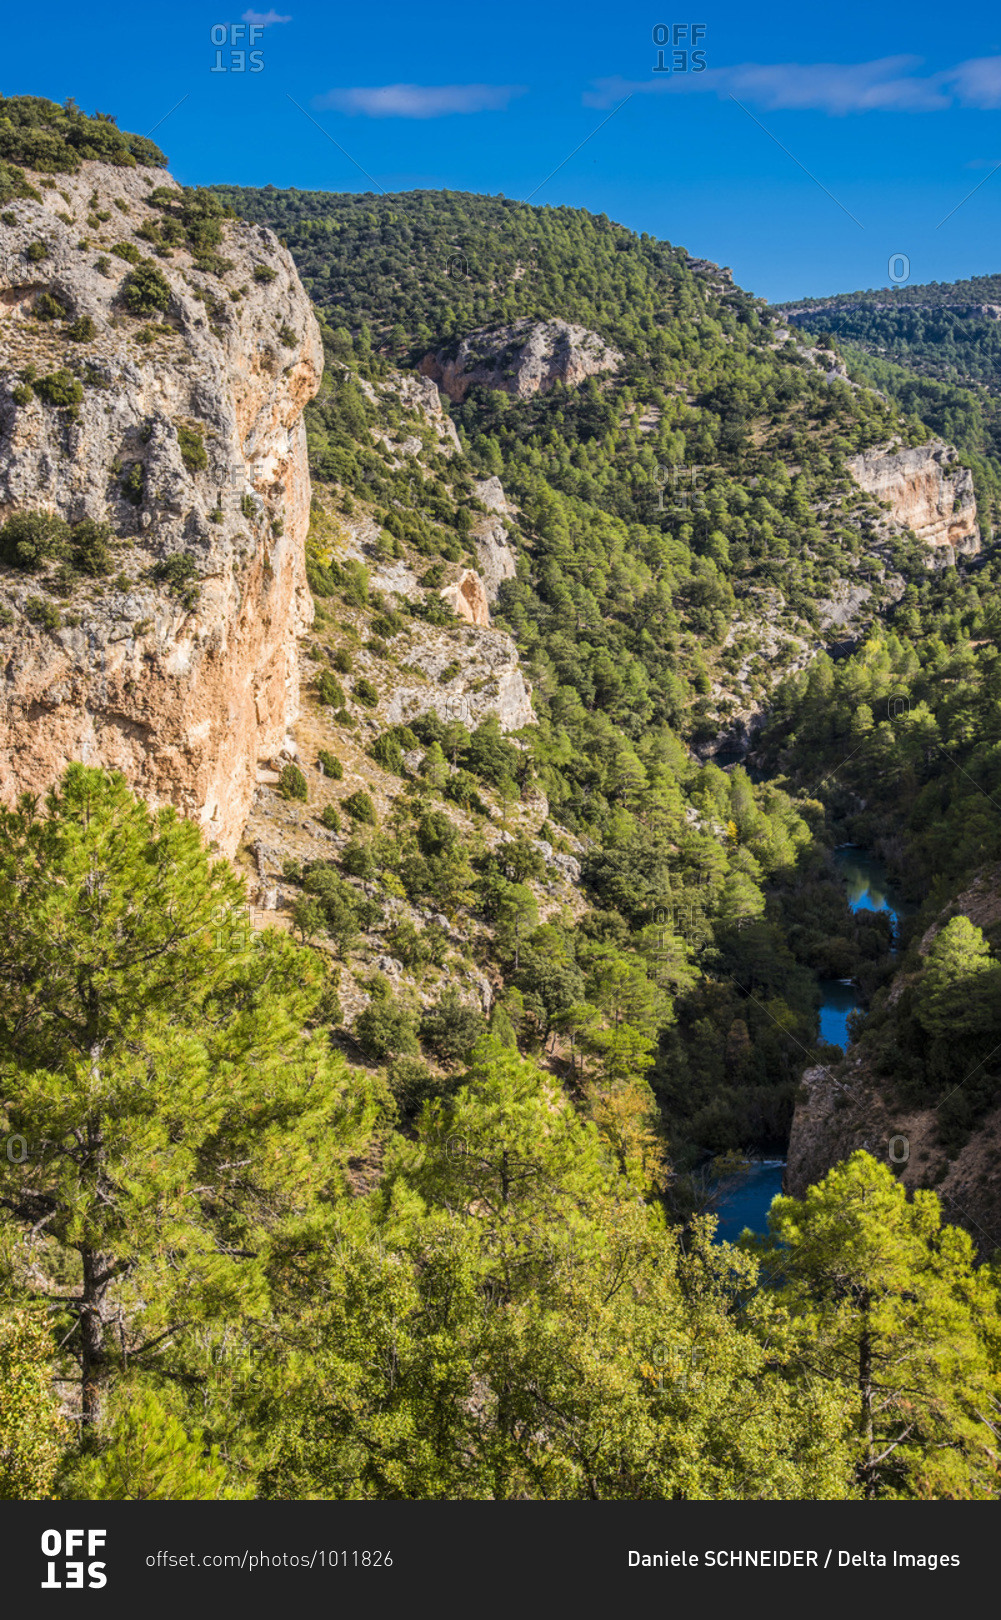 Spain, autonomous community of Castile - La Mancha, province of Cuenca, Serrania de Cuenca National park, gorge if the Jucar river seen from the Ventano del Diablo